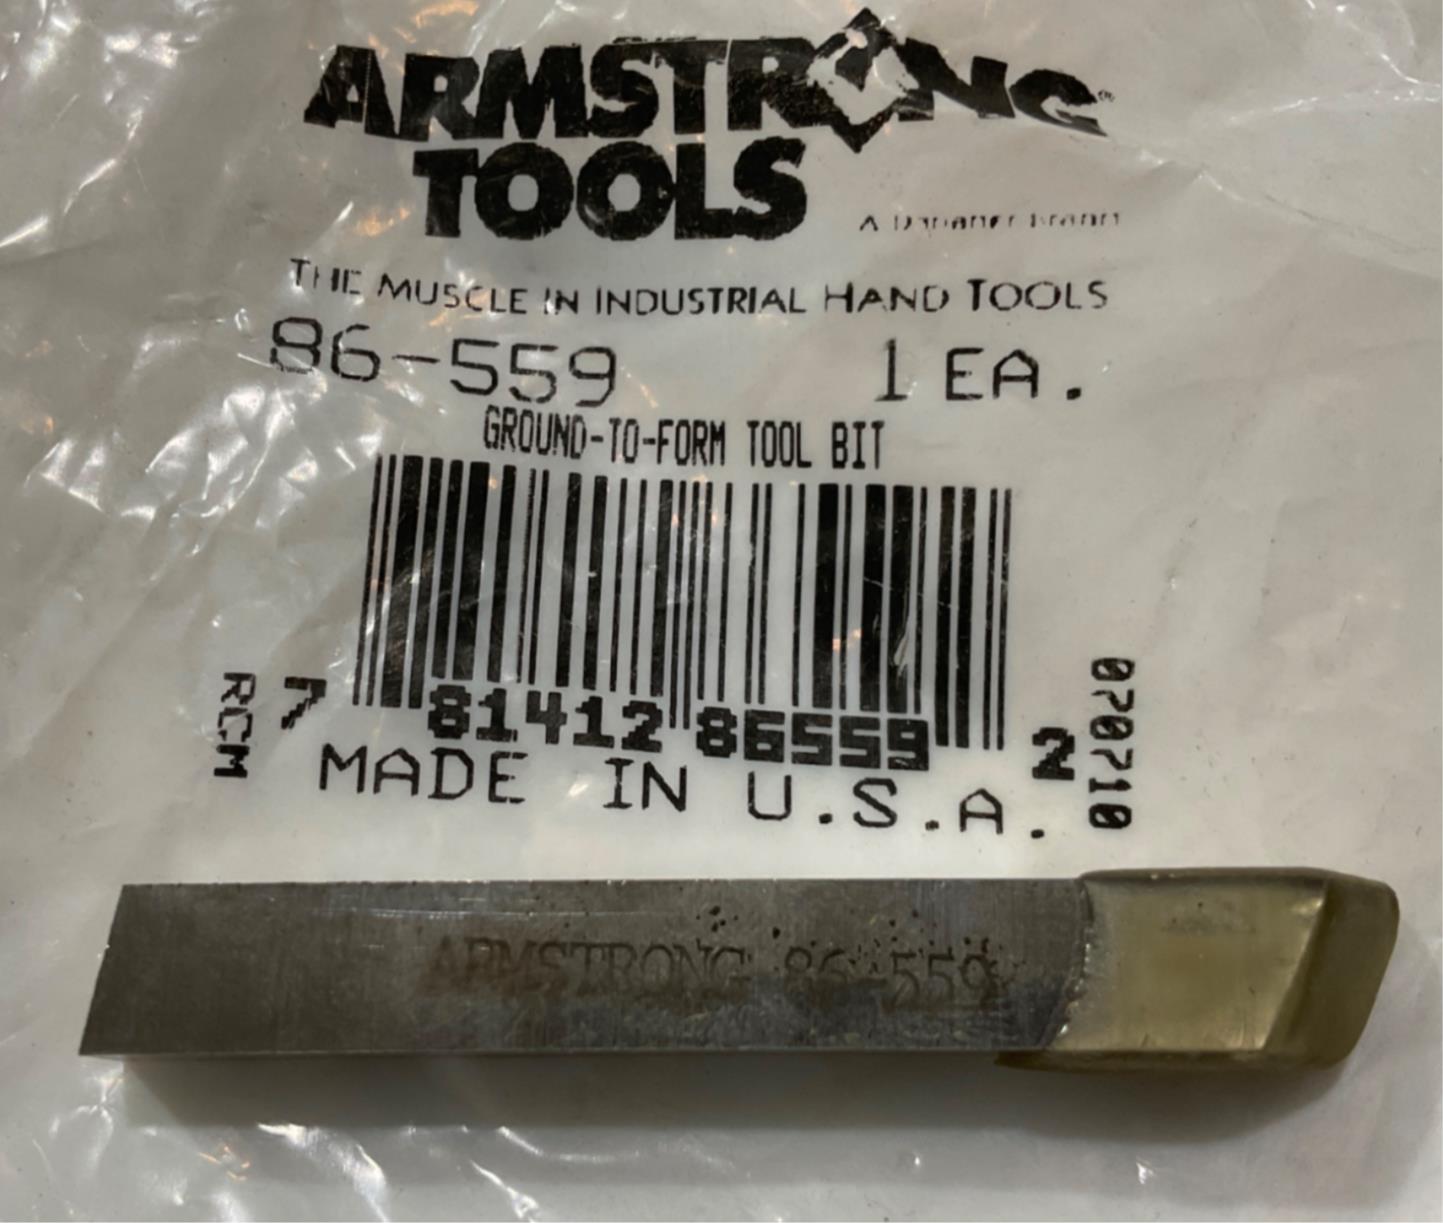 Armstrong 86-559 Ground-to-form Tool Bit USA